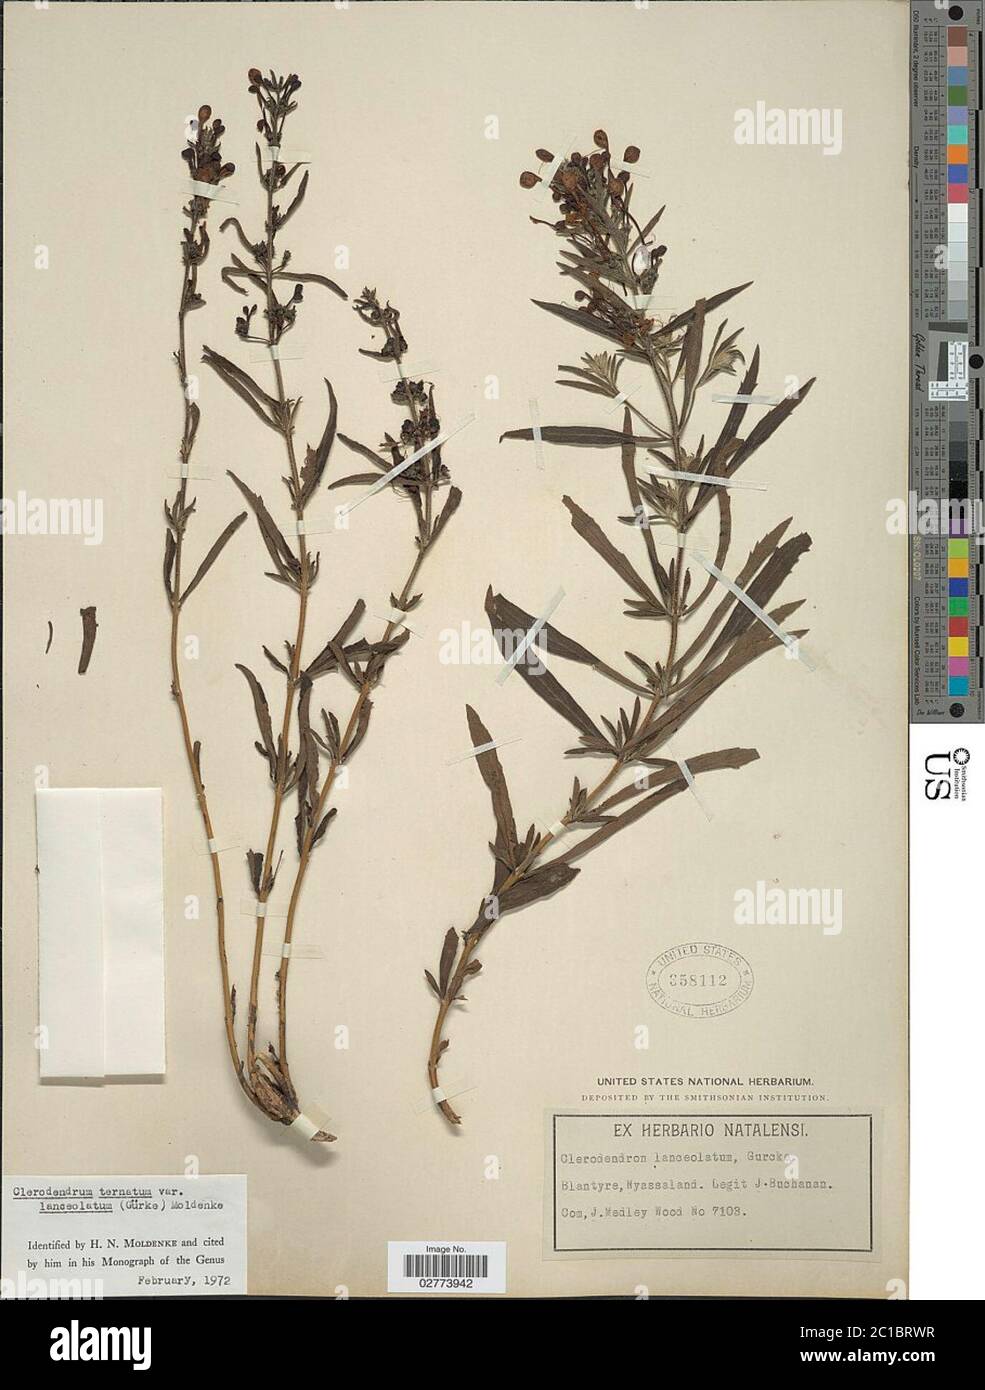 Clerodendrum ternatum var lanceolatum Moldenke Clerodendrum ternatum var lanceolatum Moldenke. Stock Photo